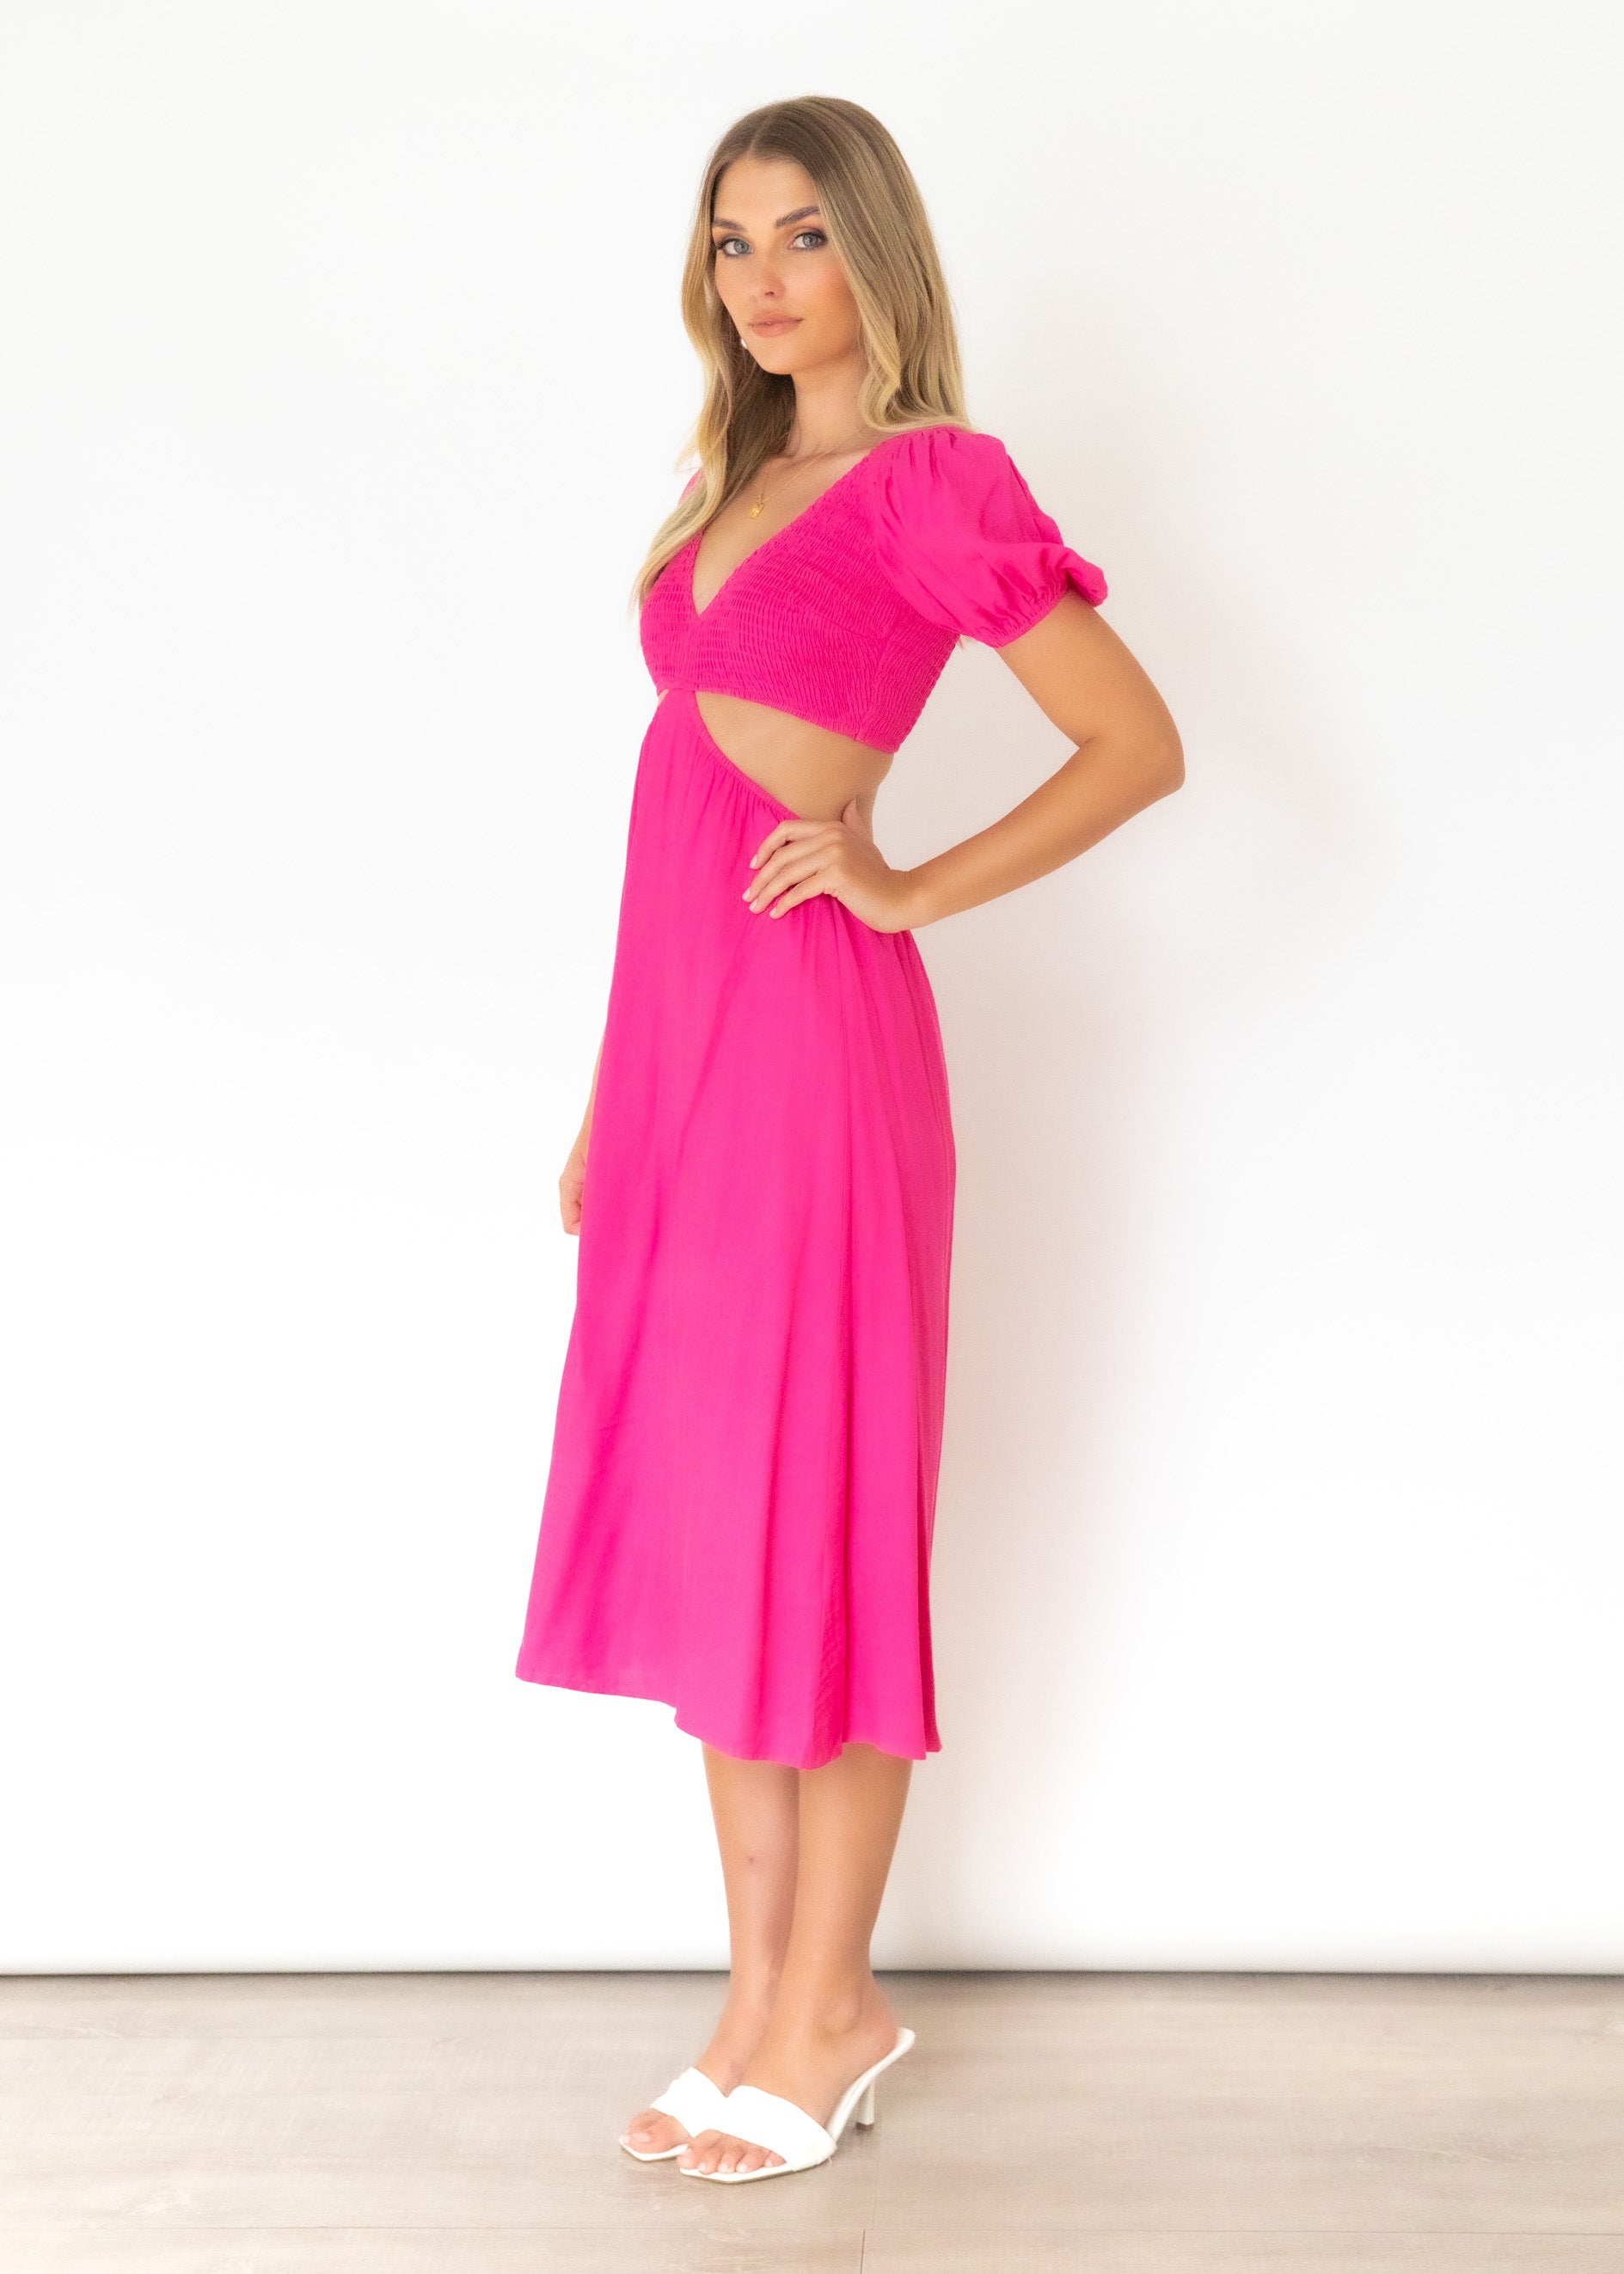 Lee Cut-Out Midi Dress - Hot Pink